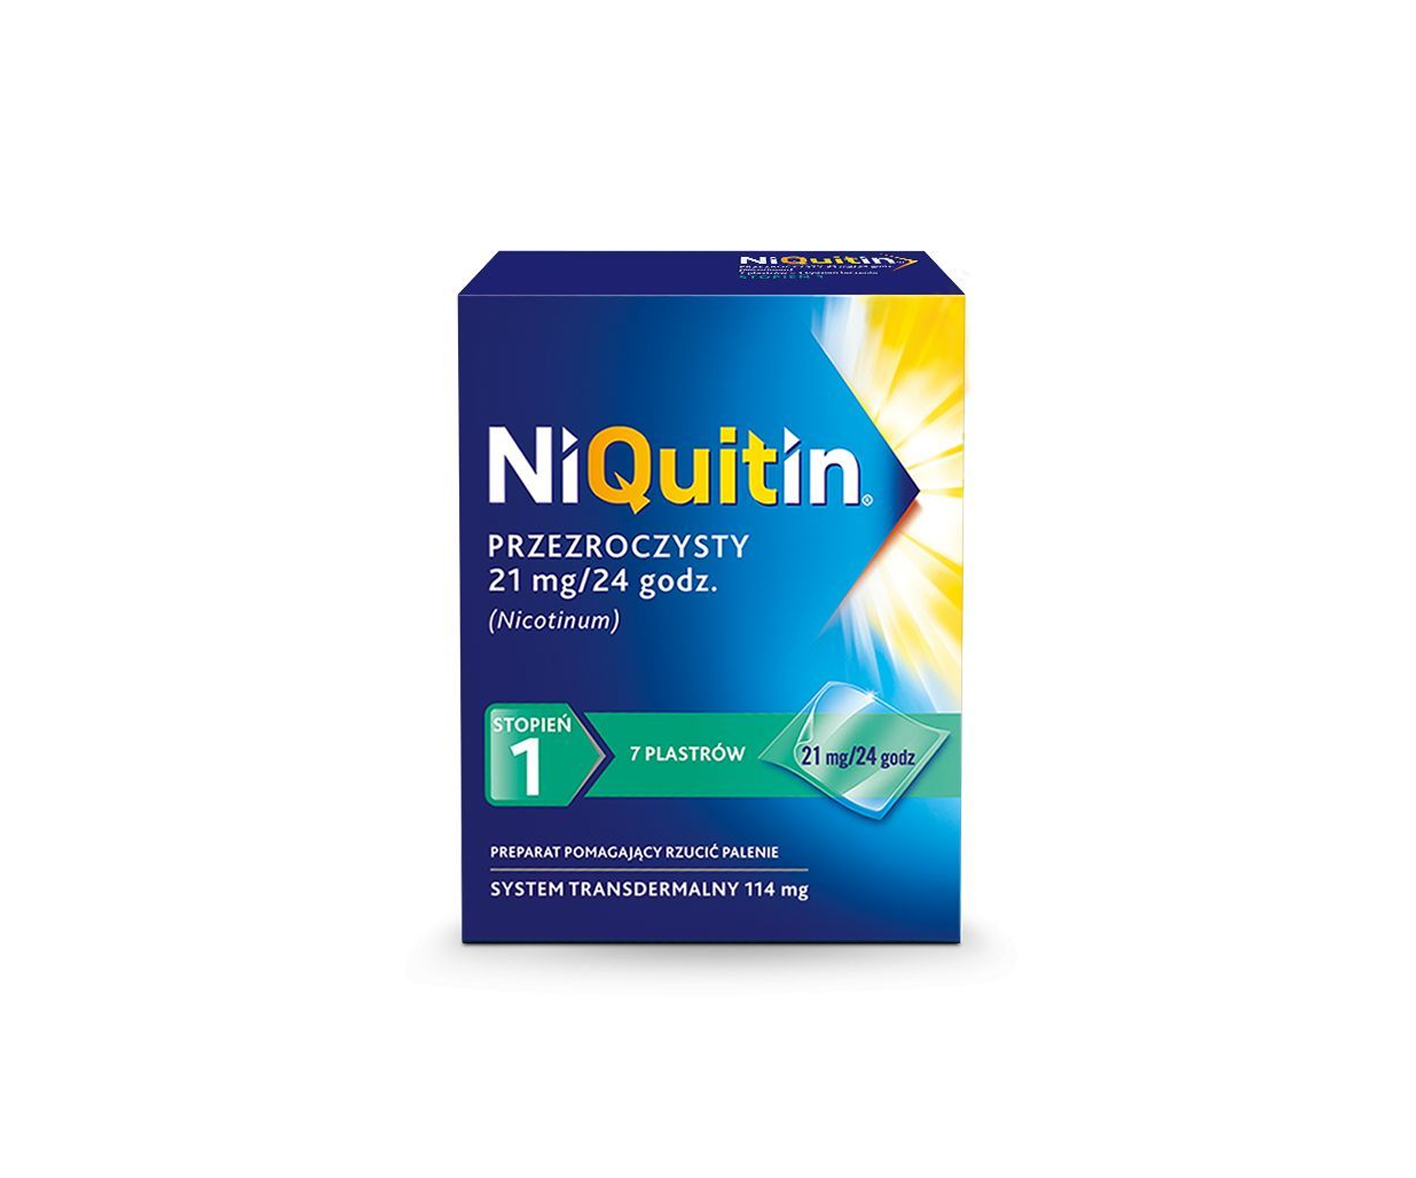 NiQuitin, grade 1, smoking cessation patches